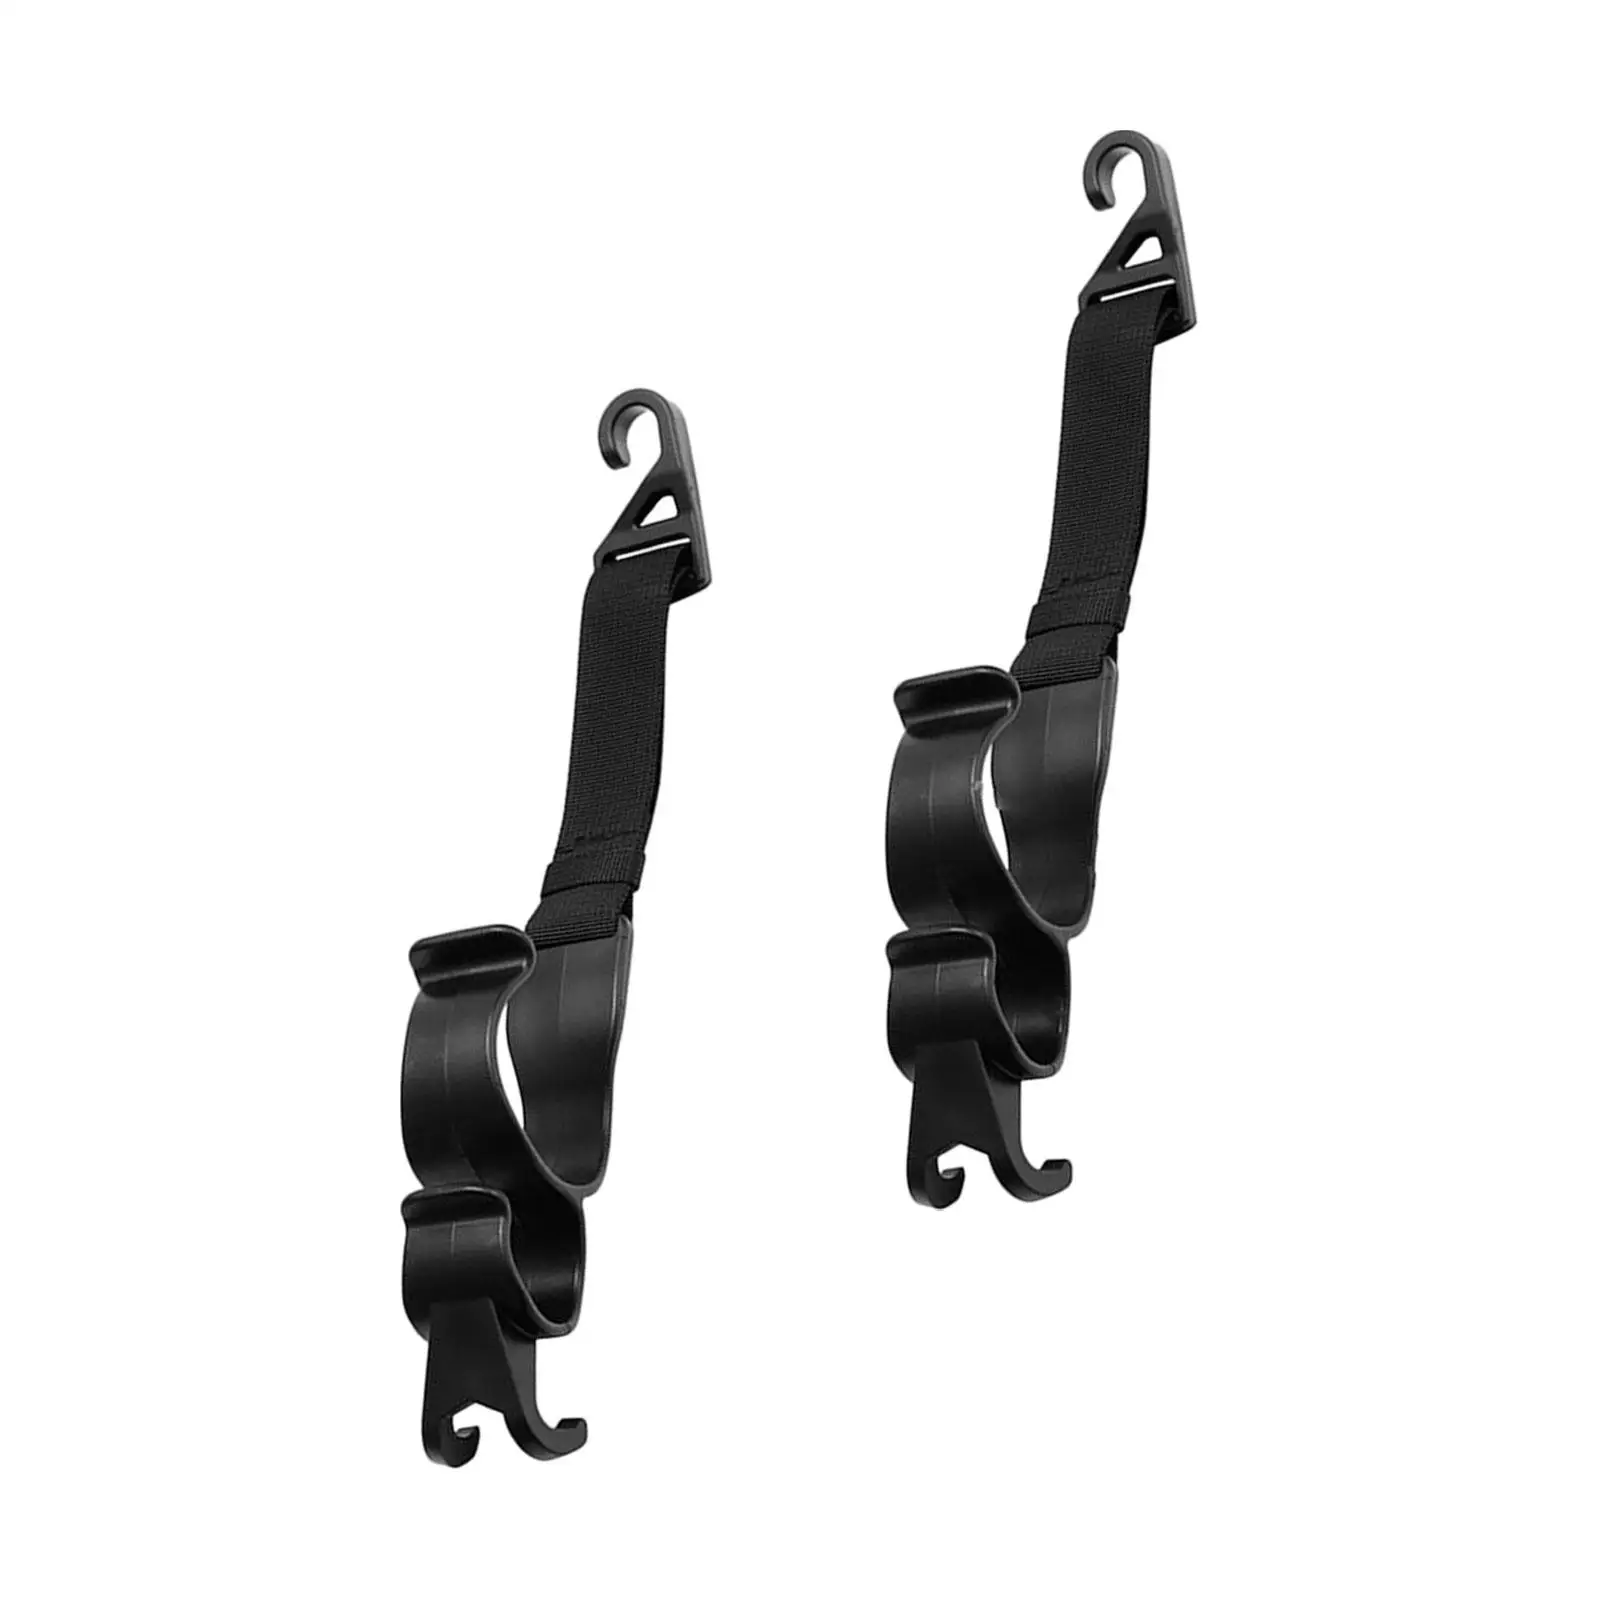 2Pcs Car Headrest Hooks Three hooks for Handbags Umbrellas Toys